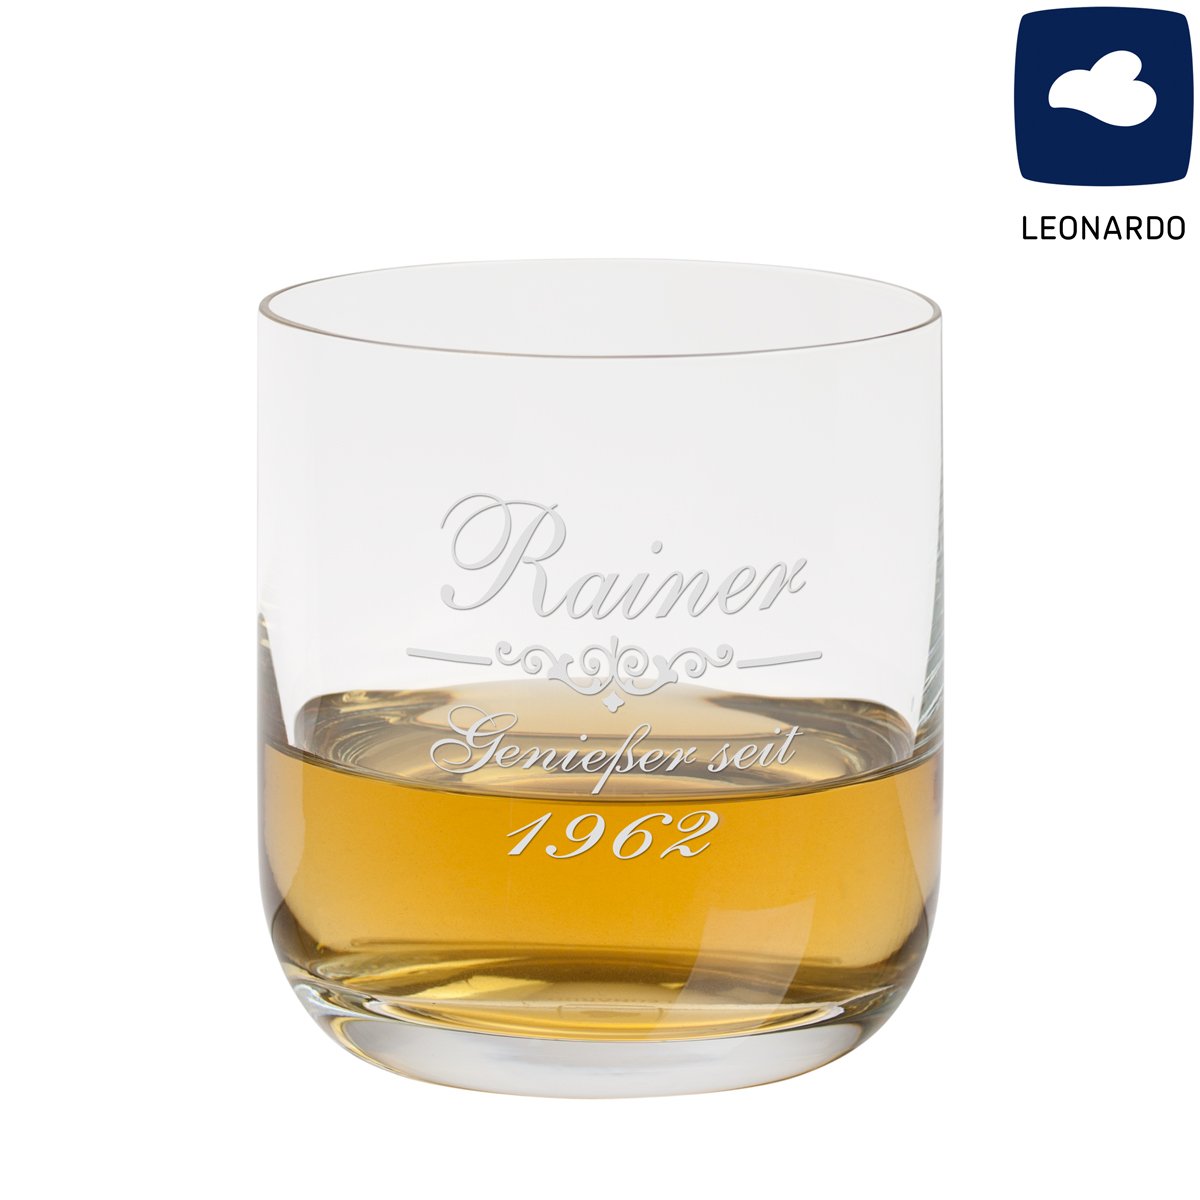 Leonardo Whiskyglas für Genießer